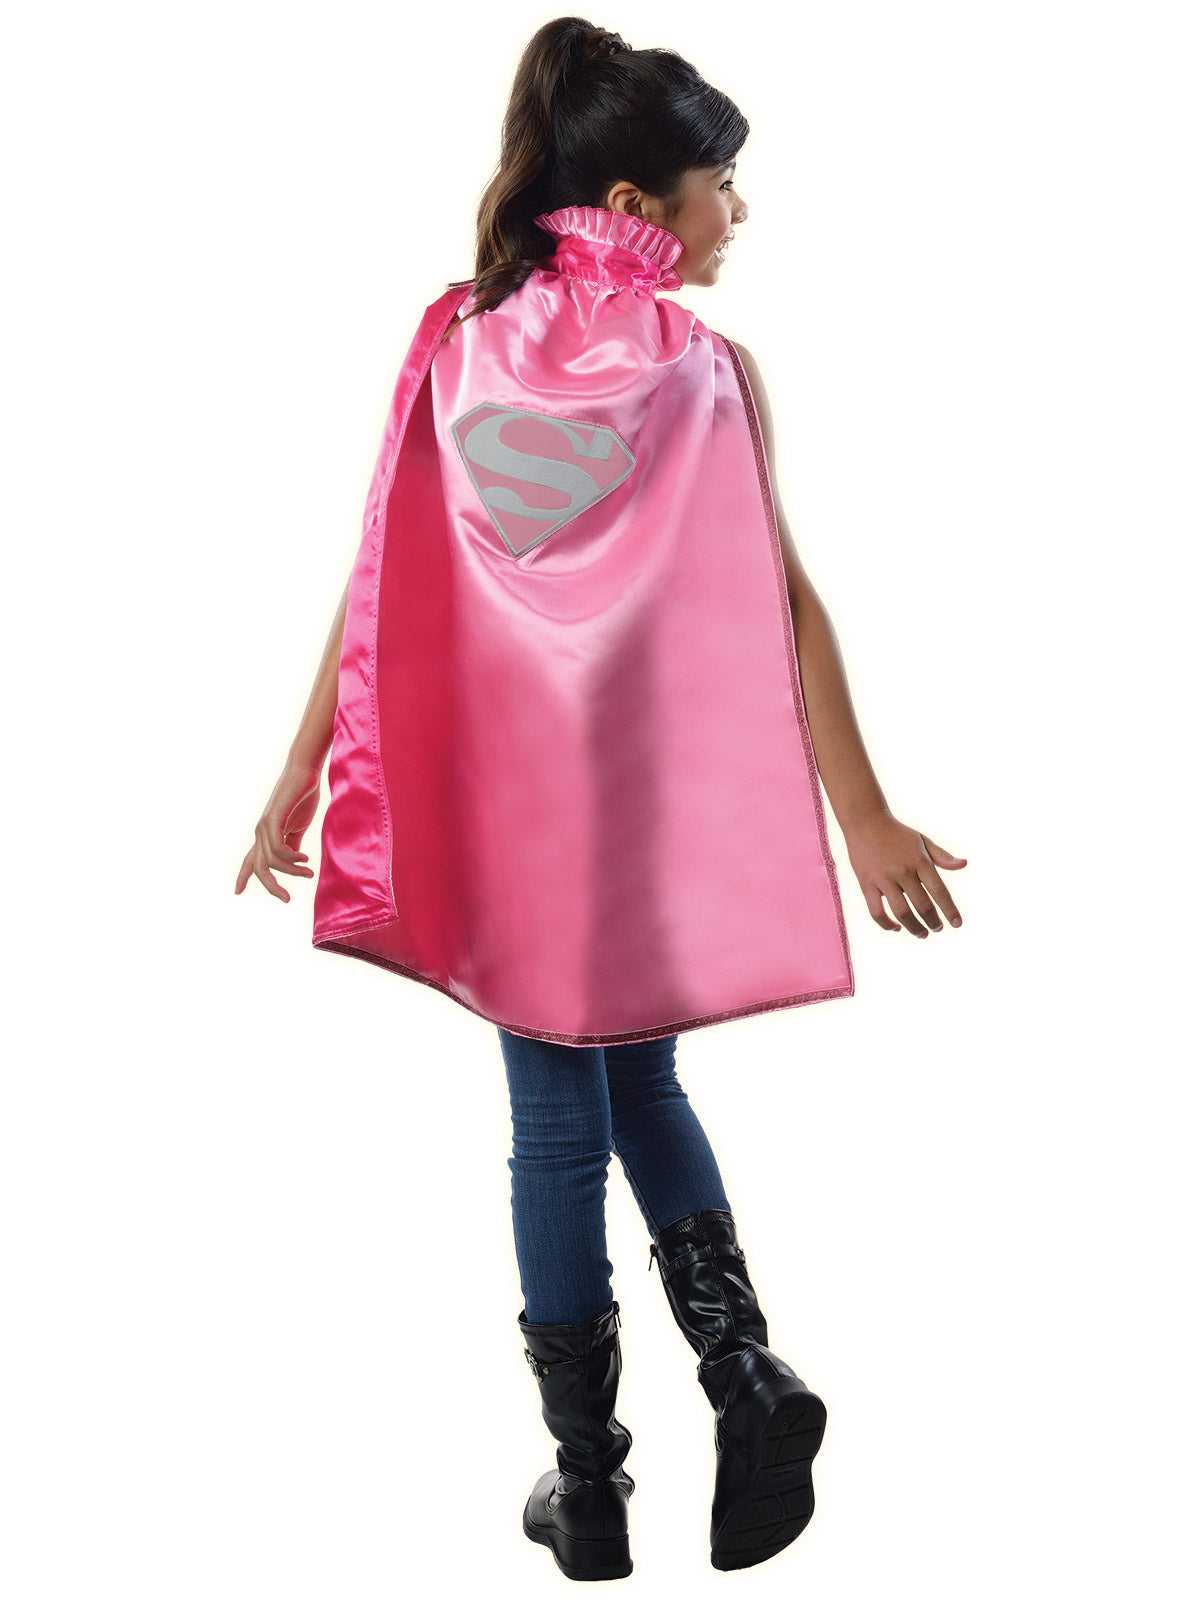 Supergirl DC Pink Cape Girls Licensed Genuine Costume Cape